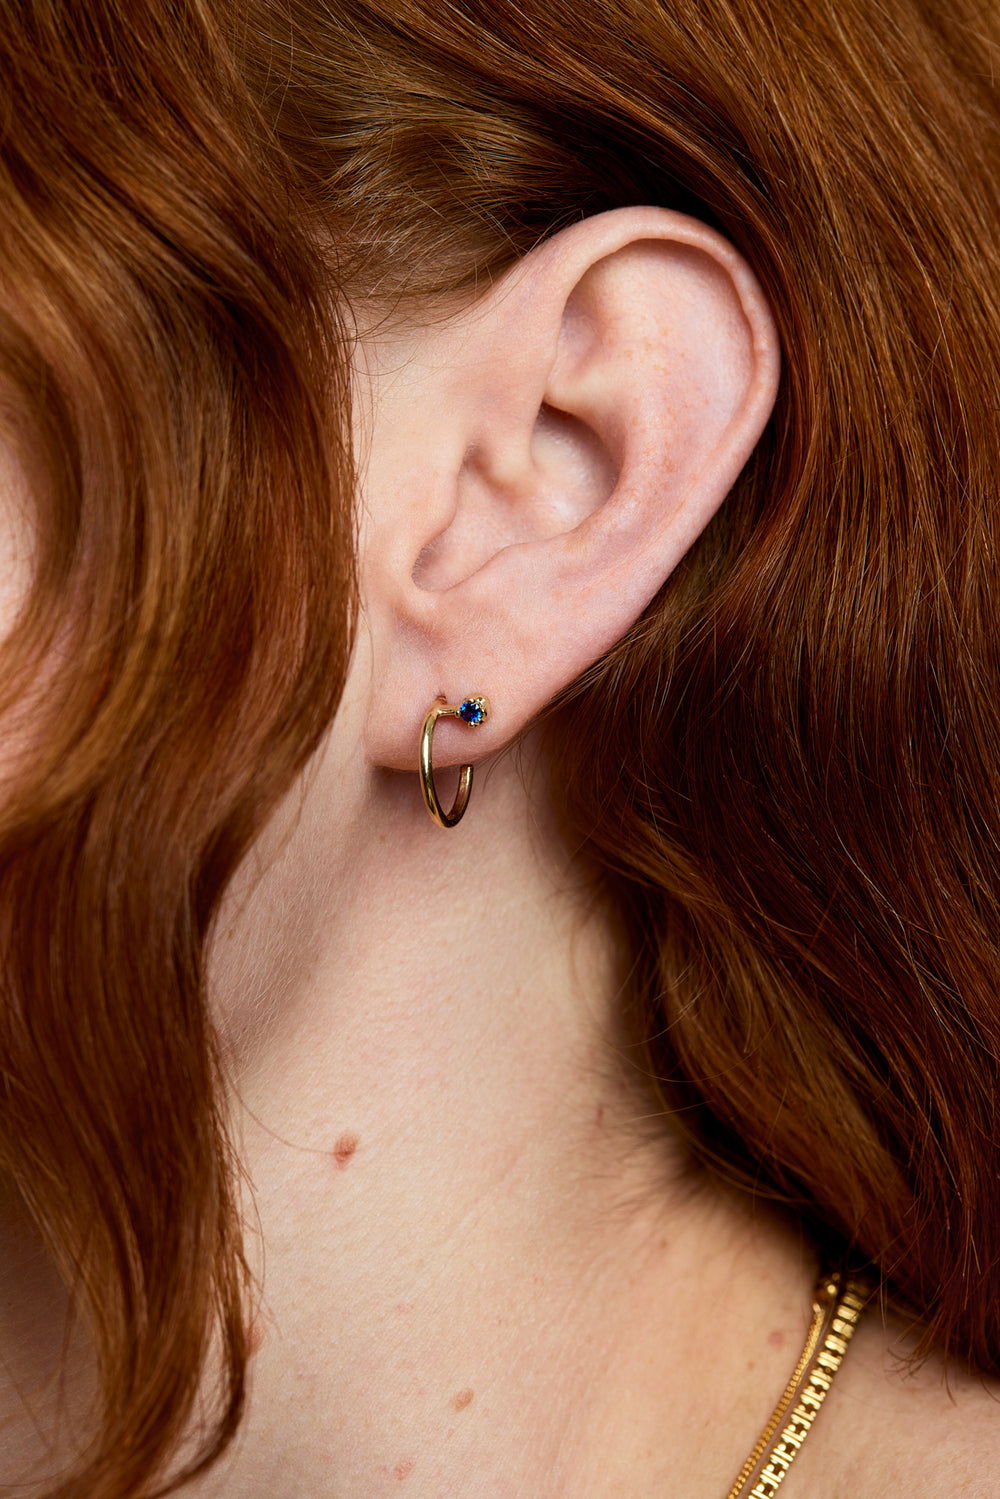 Mini Lara Sapphire Hoop Earrings | 9K White Gold| Natasha Schweitzer